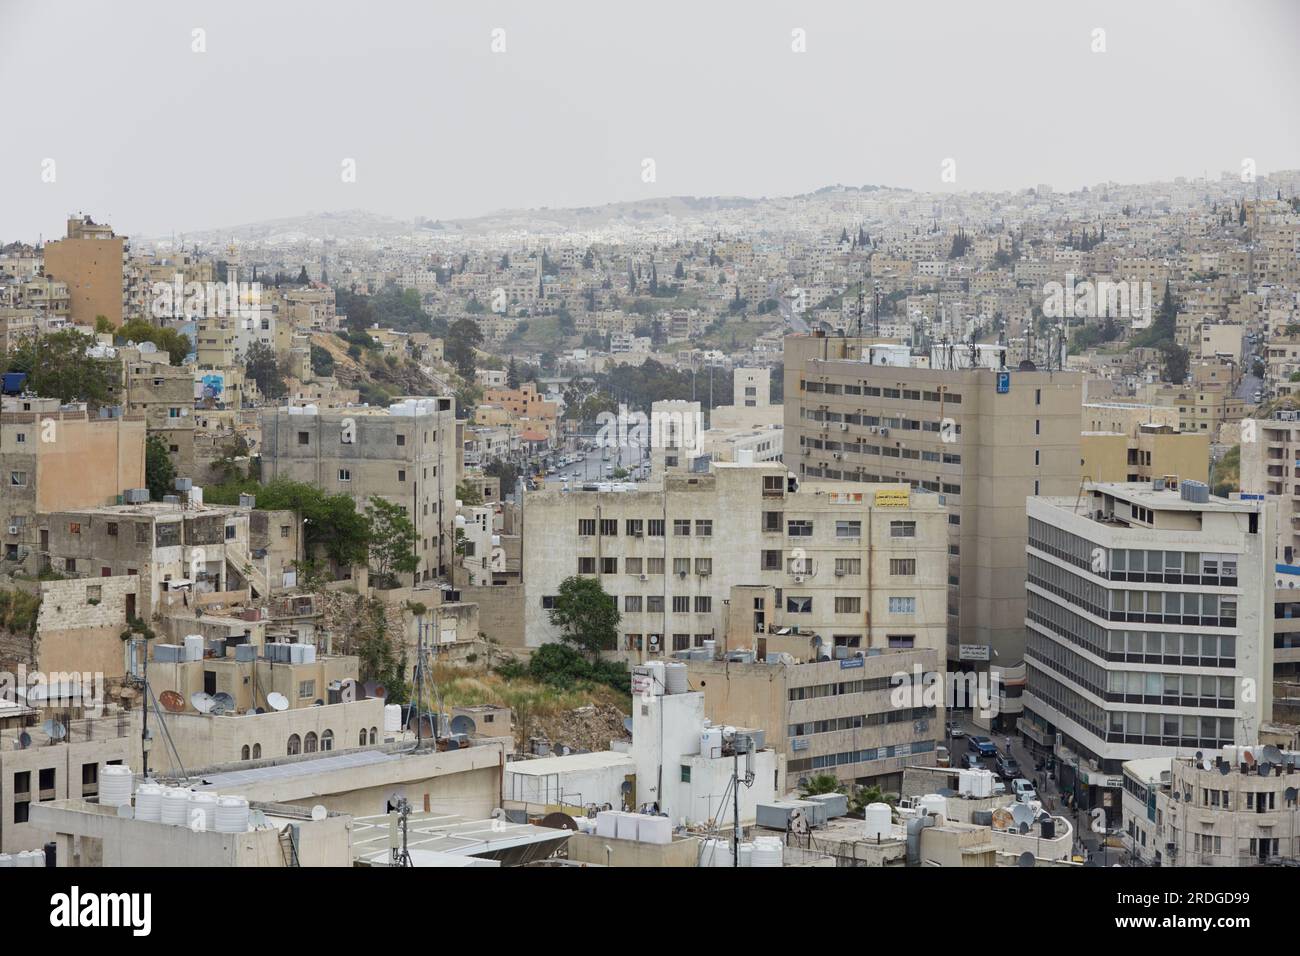 View of Amman city on an overcast day, Amman, Jordan Stock Photo